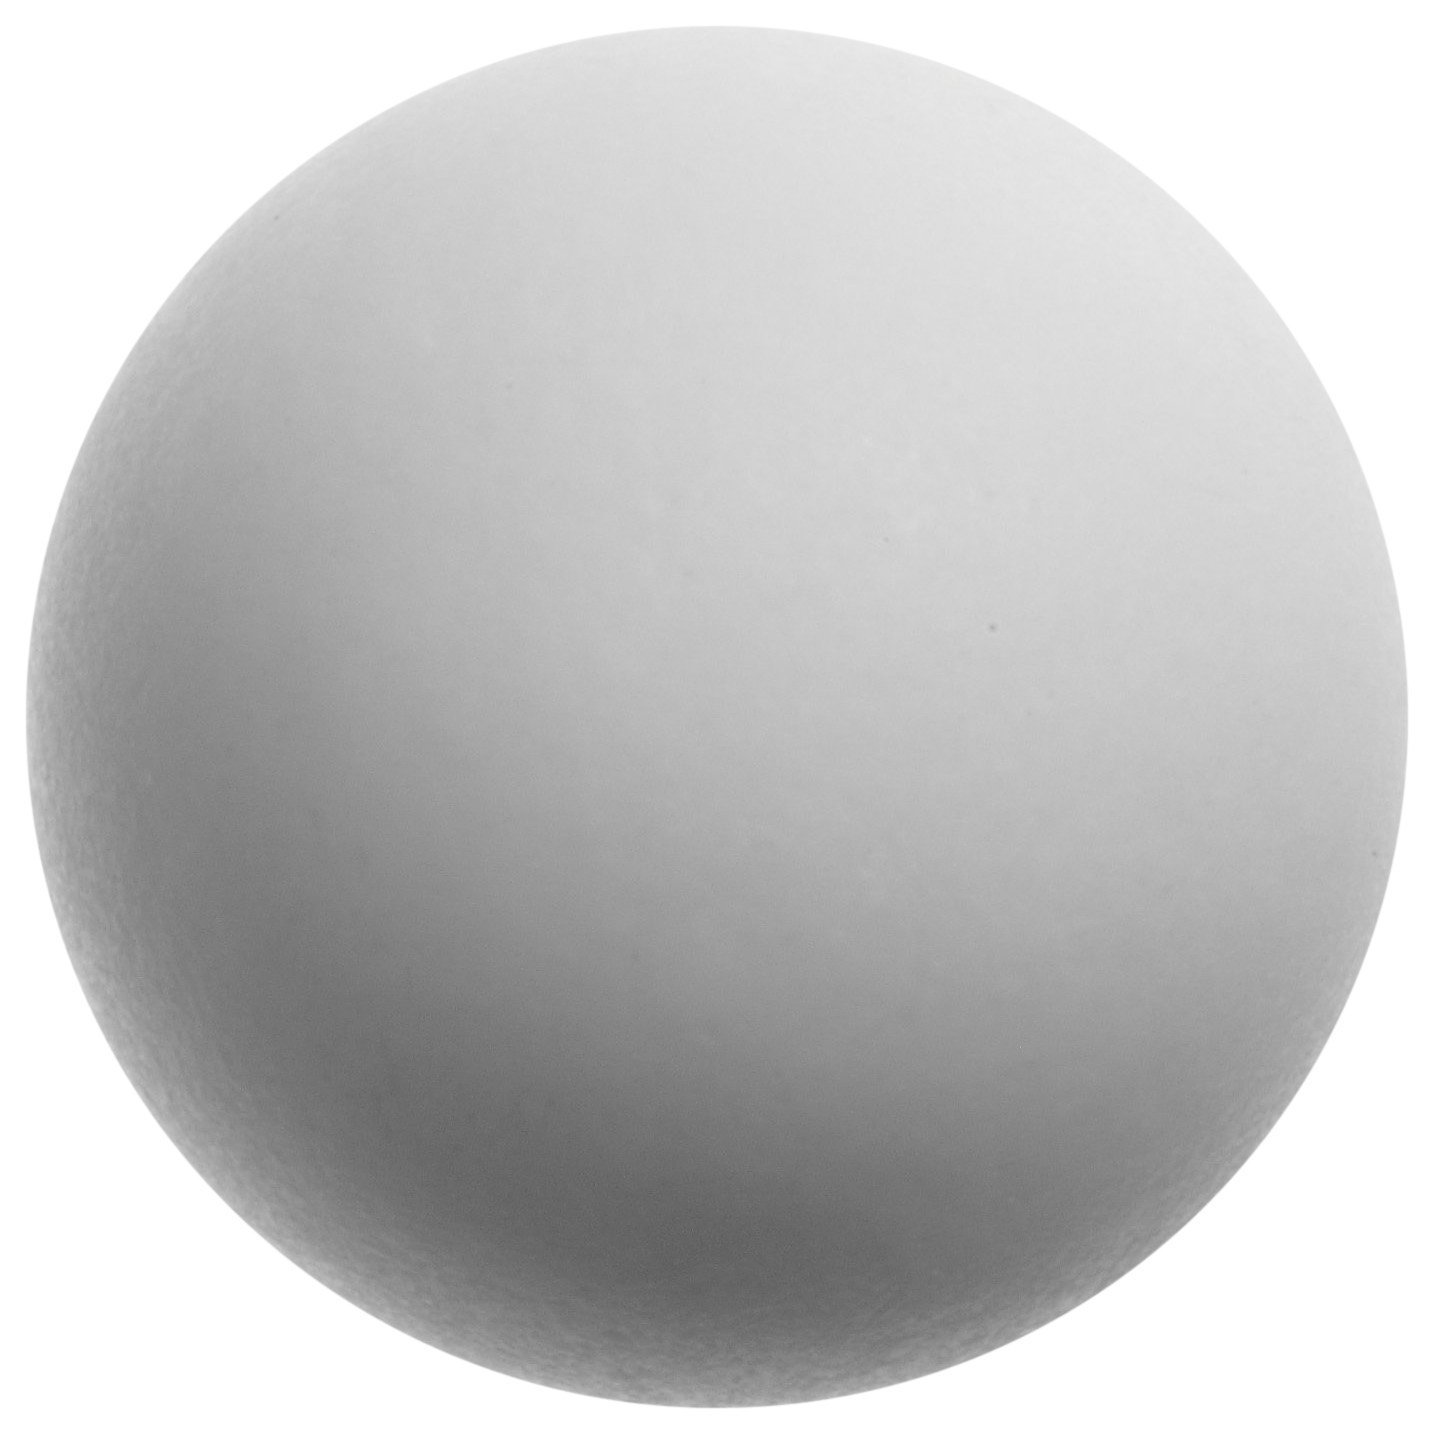 Amazon.com: PTFE (Polytetrafluoroethylene) Sphere, Ground, Opaque ...